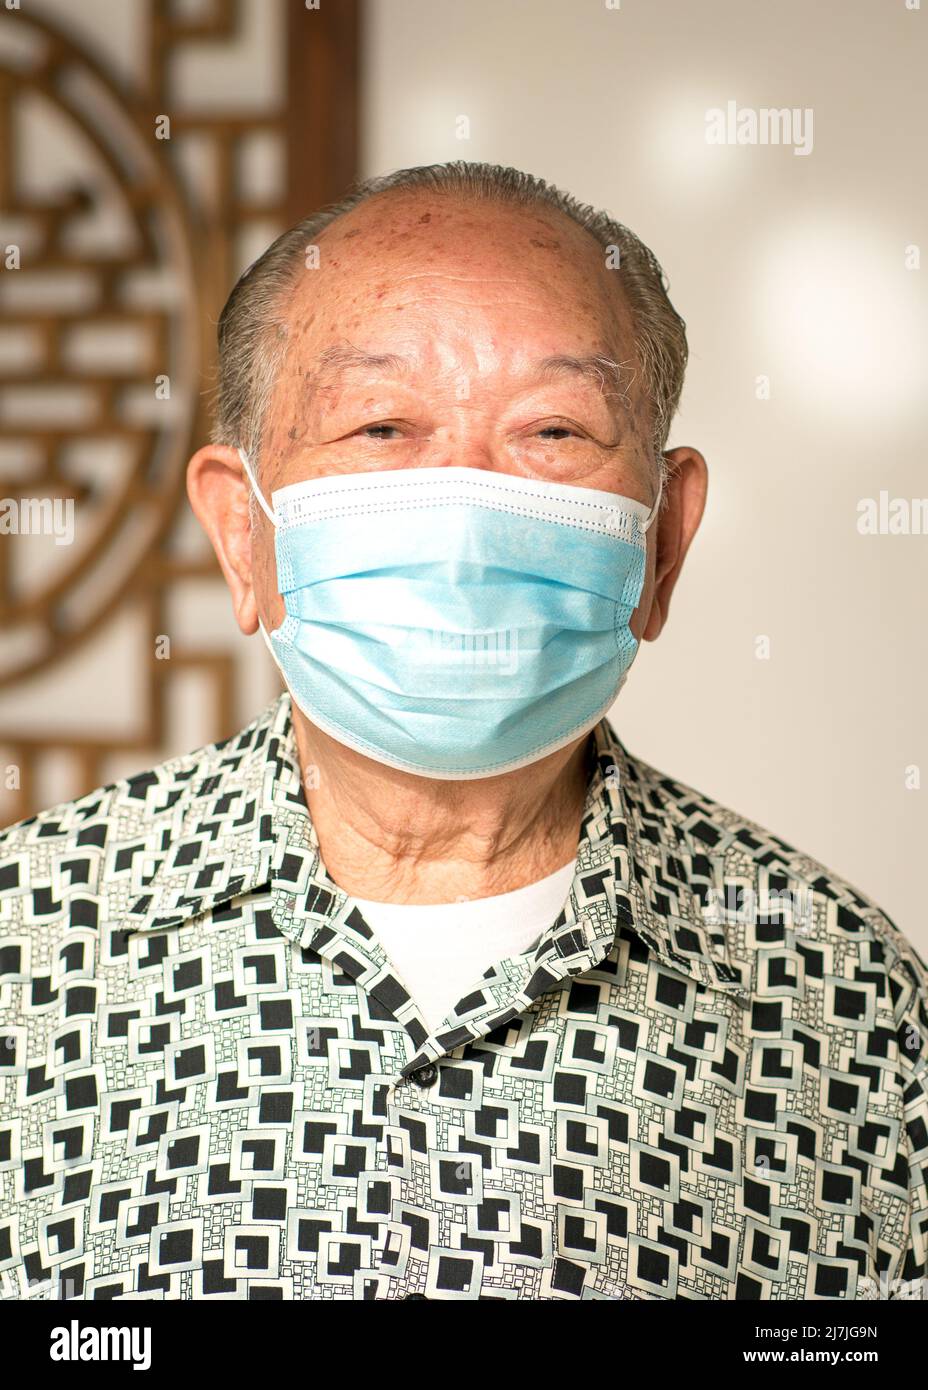 Senior Asian man, Chinese ethnicity. Wearing medical face mask. Portrait, close up shot. Stock Photo